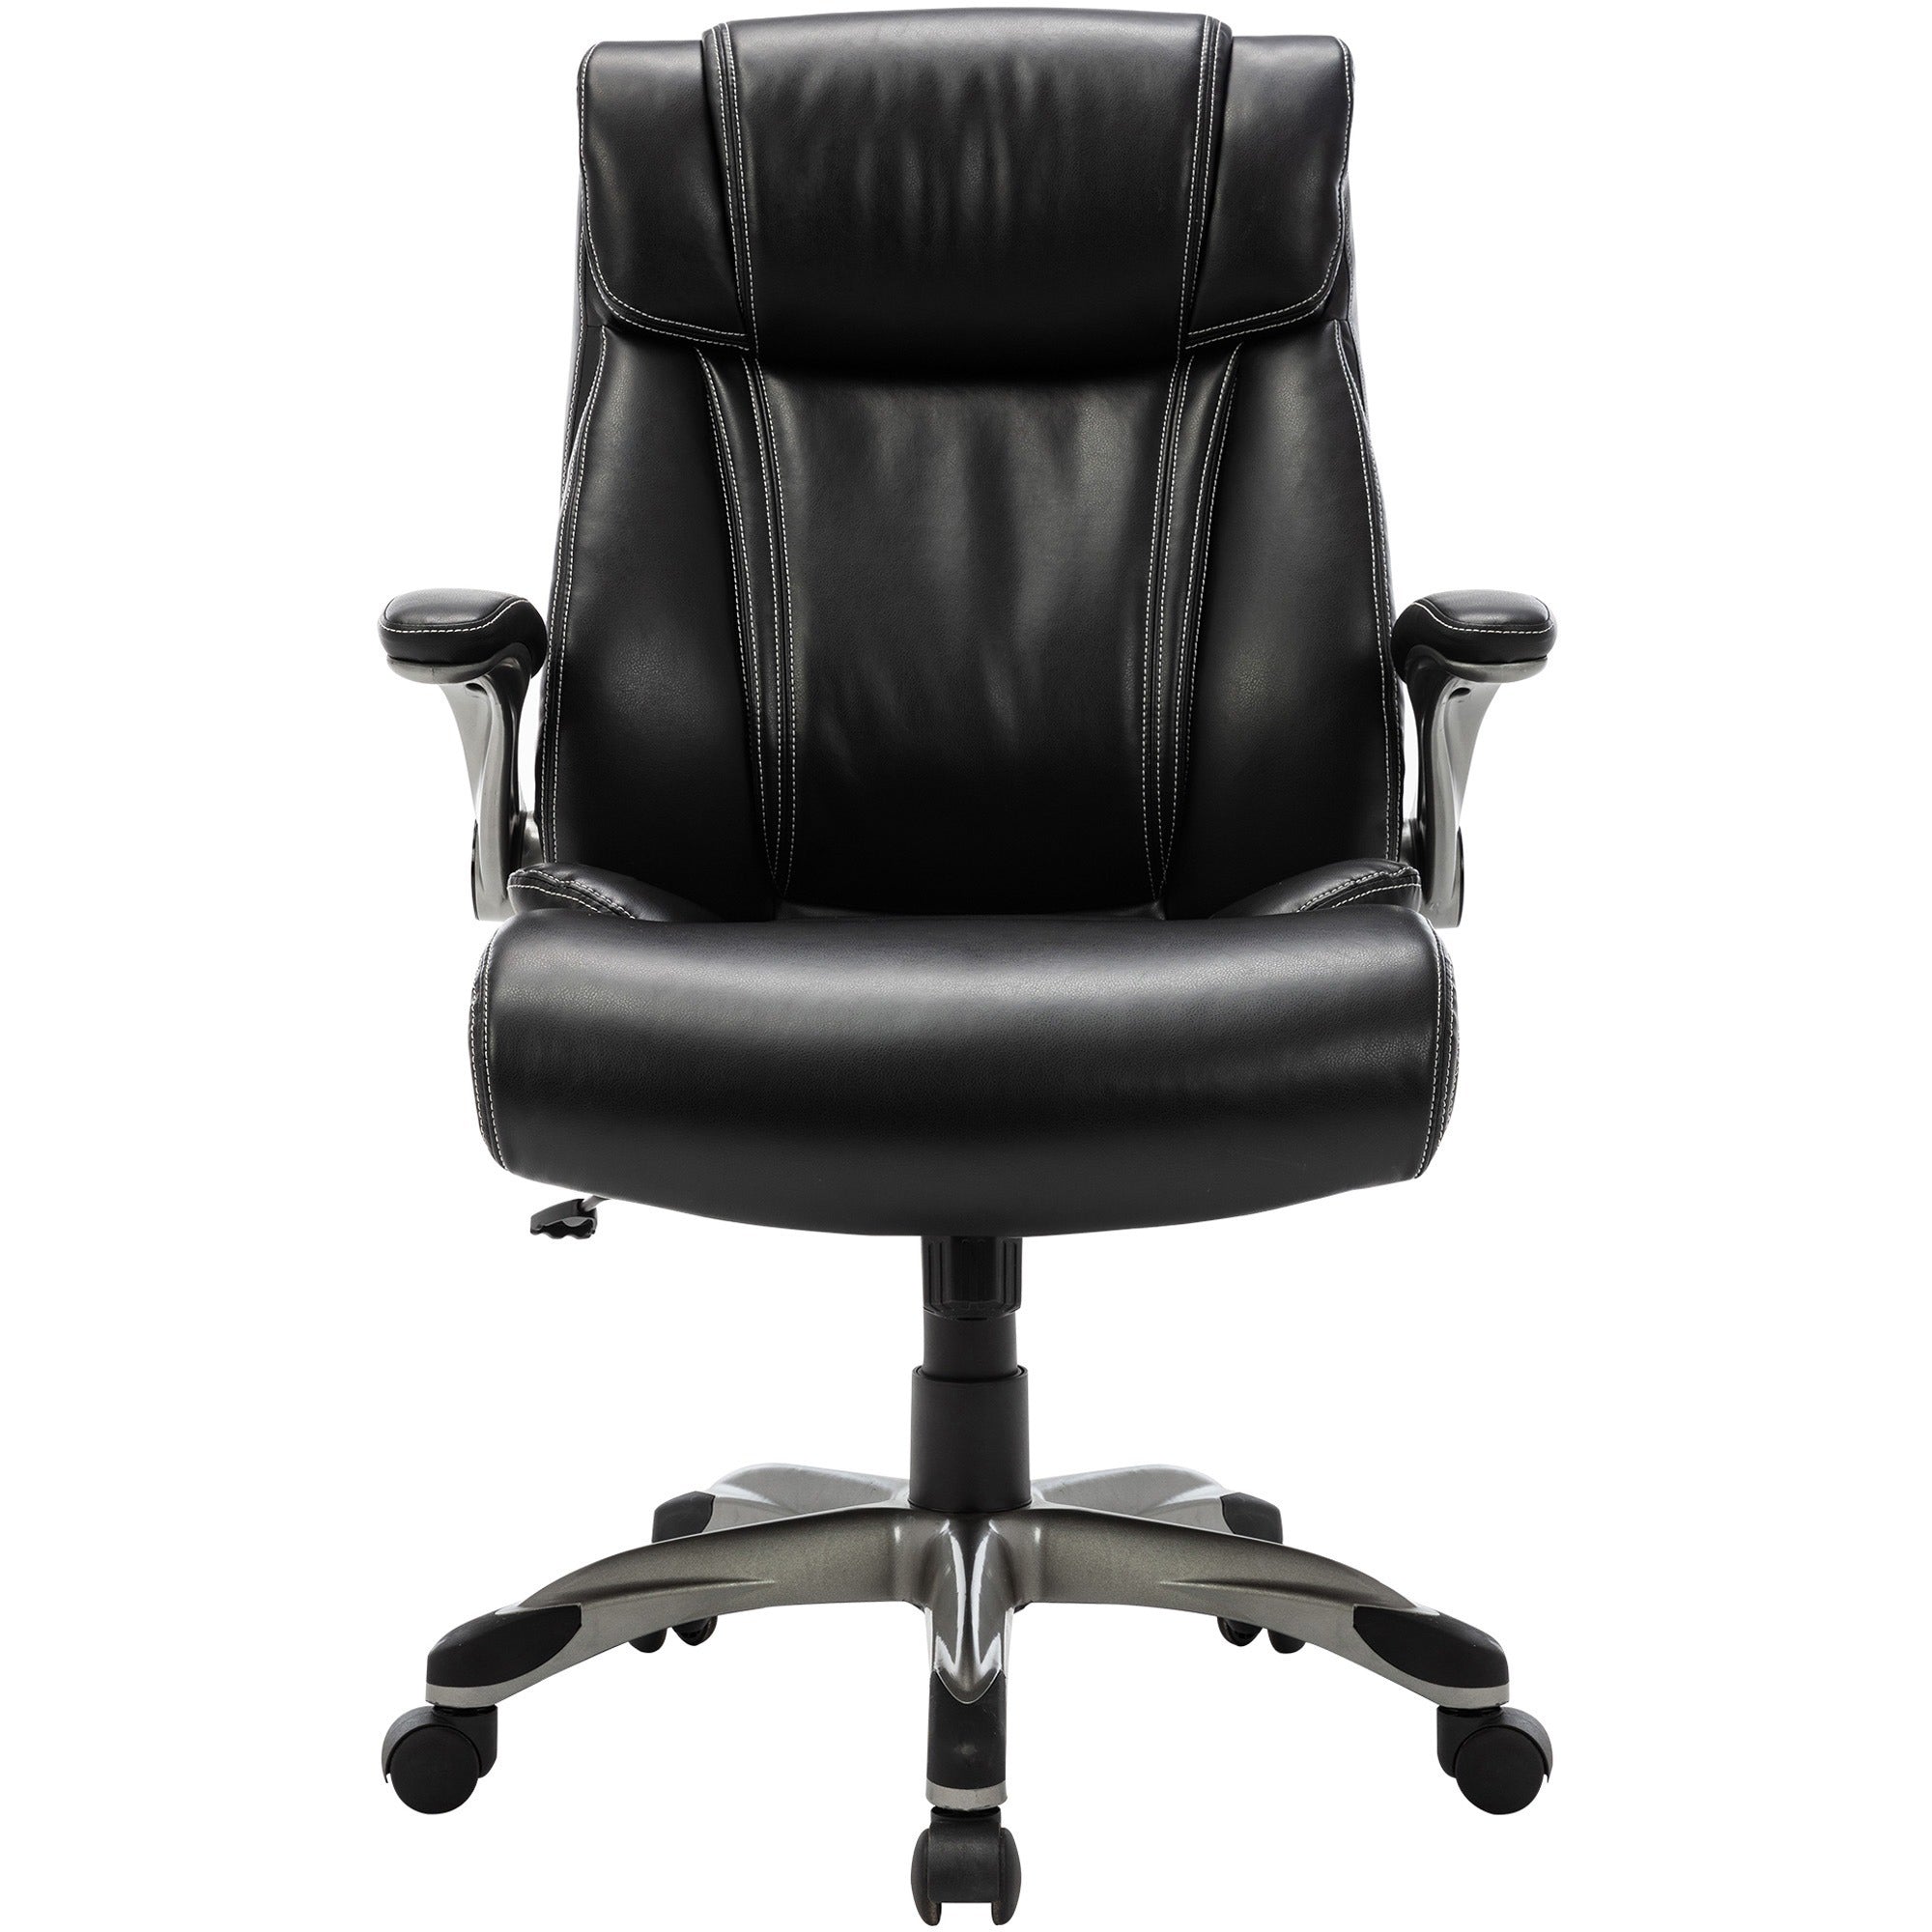 soho-high-back-office-chair-flip-with-armrest-black-bonded-leather-seat-black-bonded-leather-back-high-back-5-star-base-armrest-1-each_llr81803 - 3